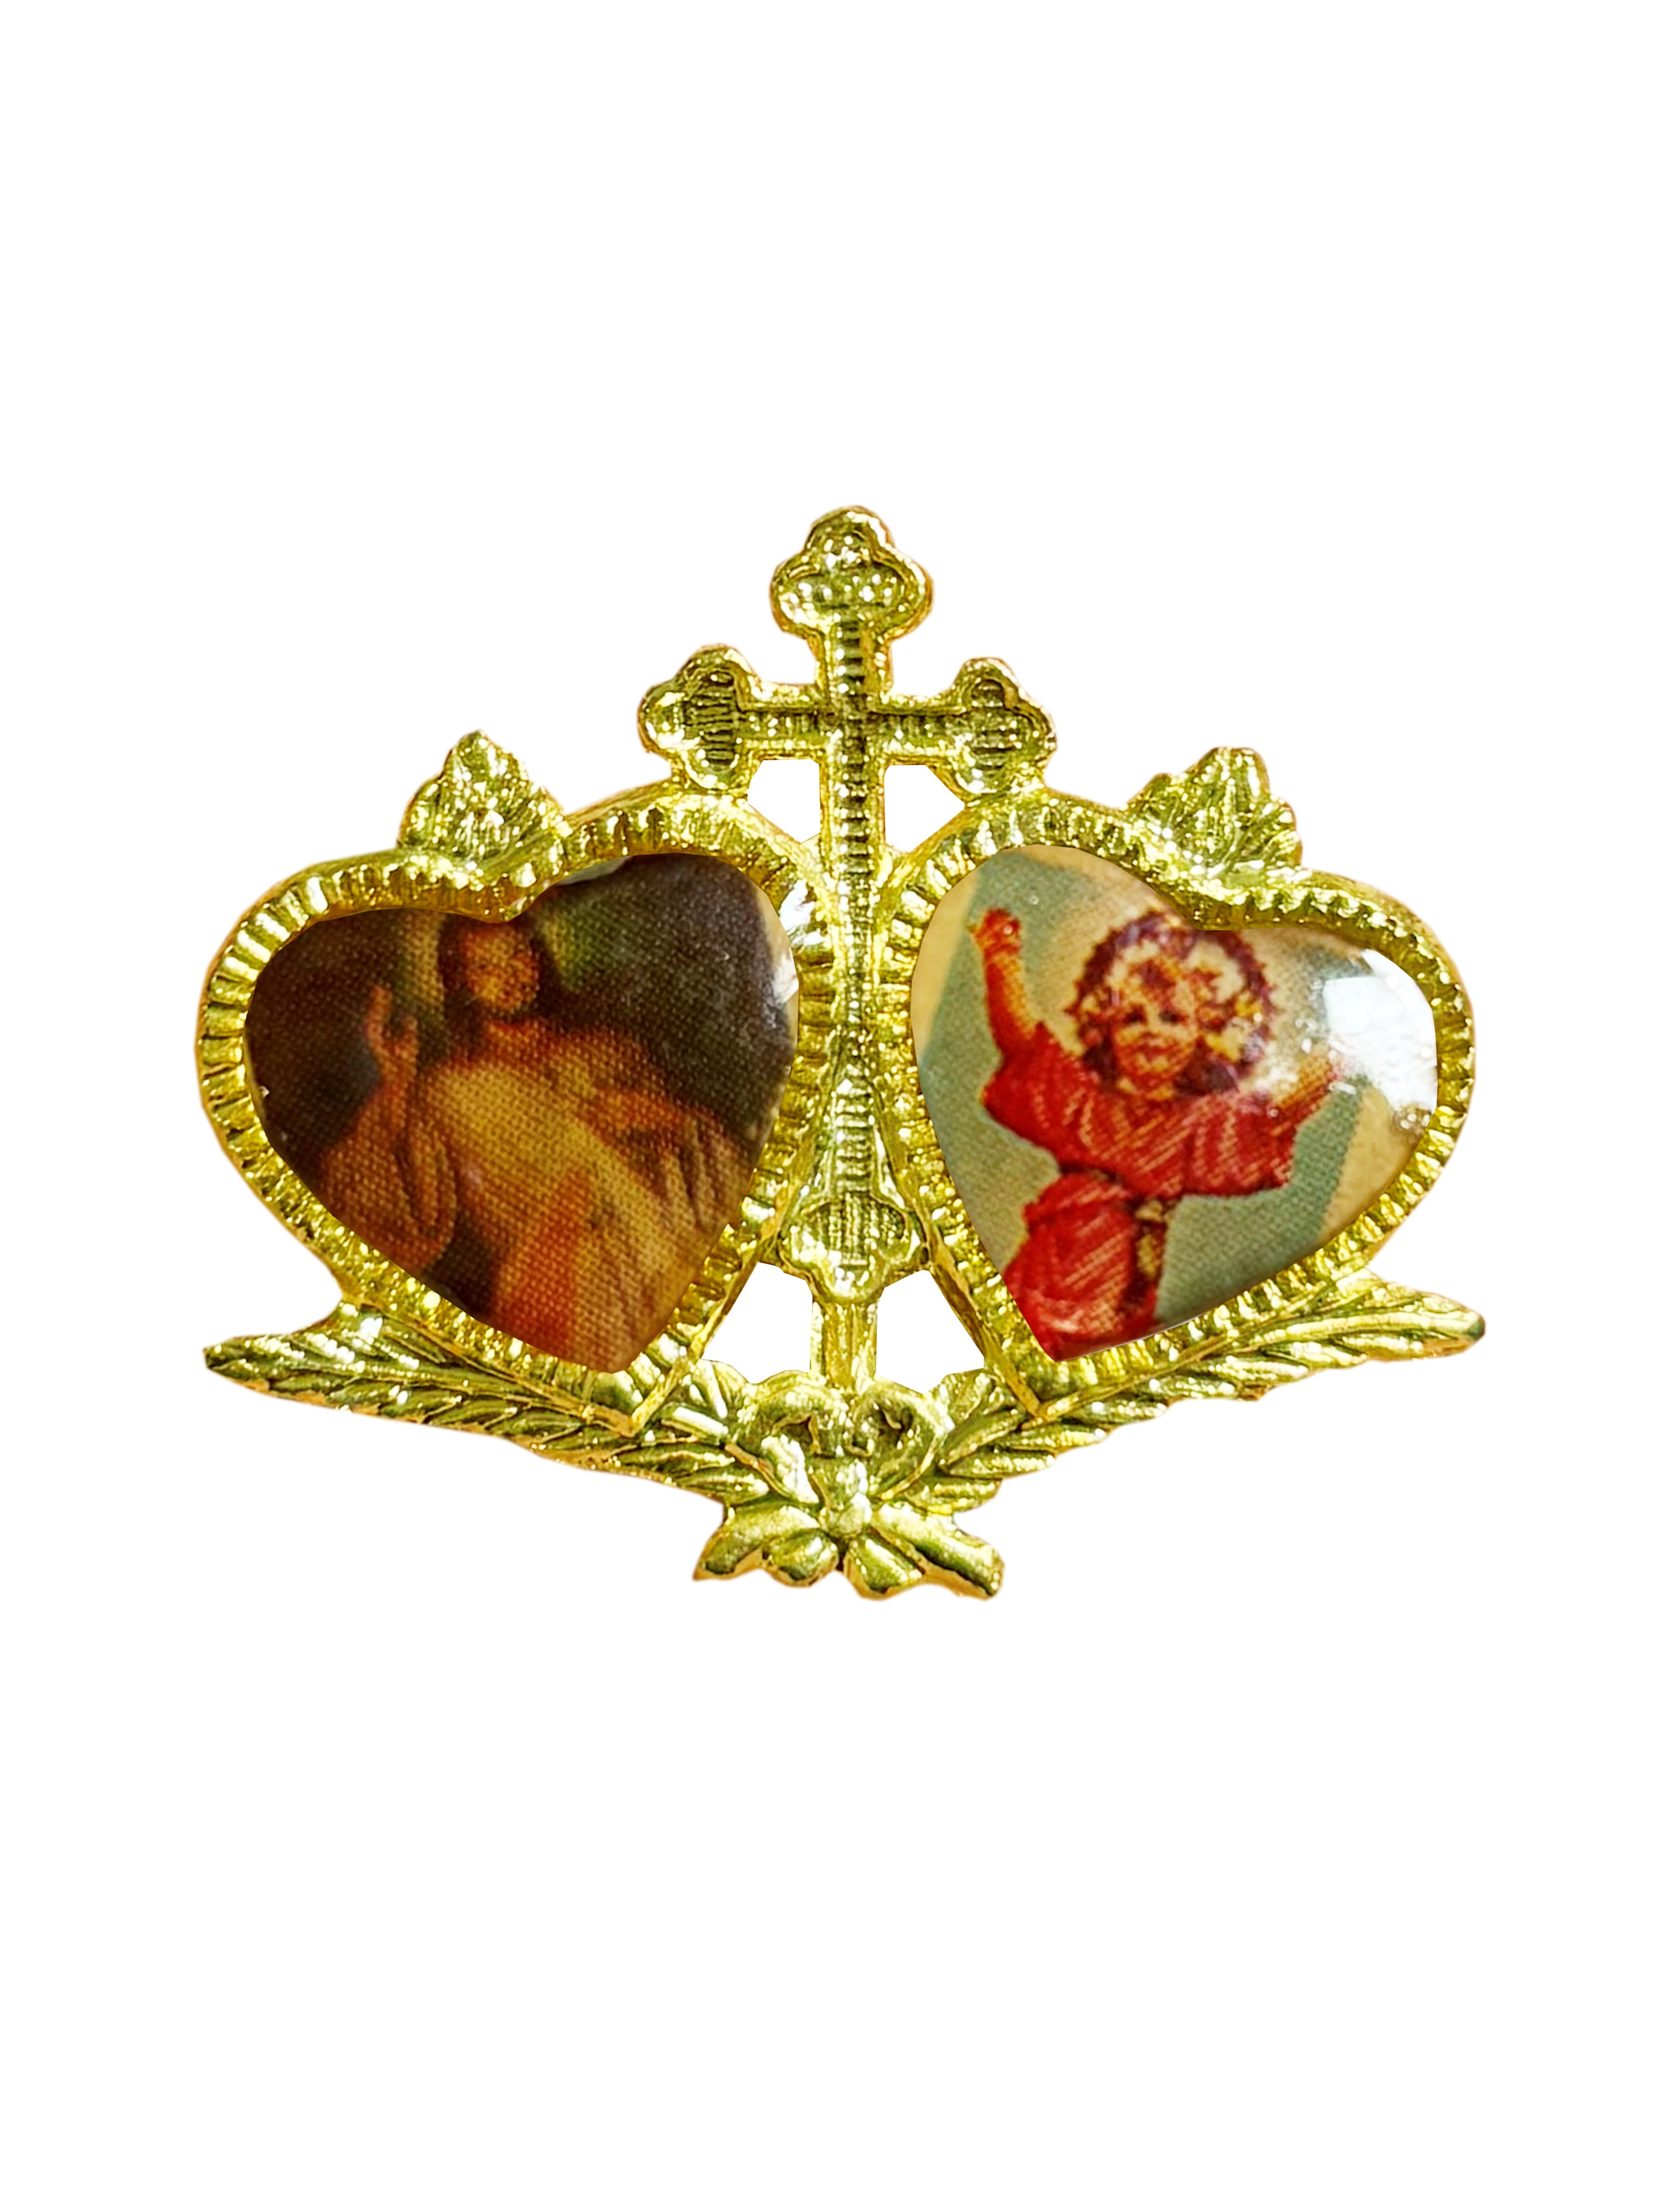 Two Hearts gold catholics lapel pin